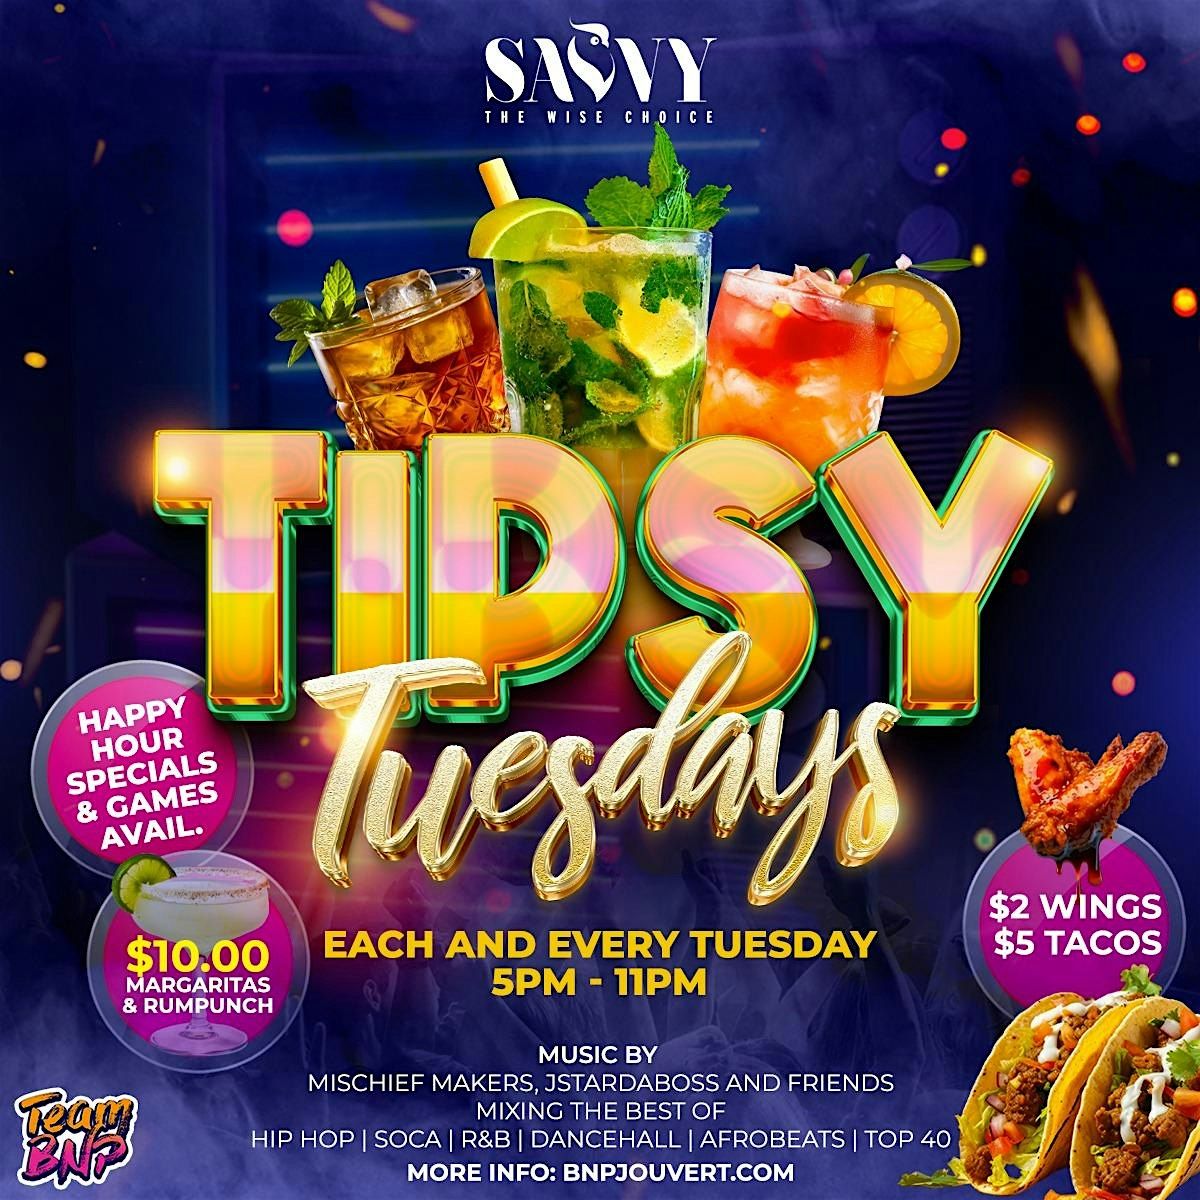 Tipsy Tuesdays @ Savvy Bistro